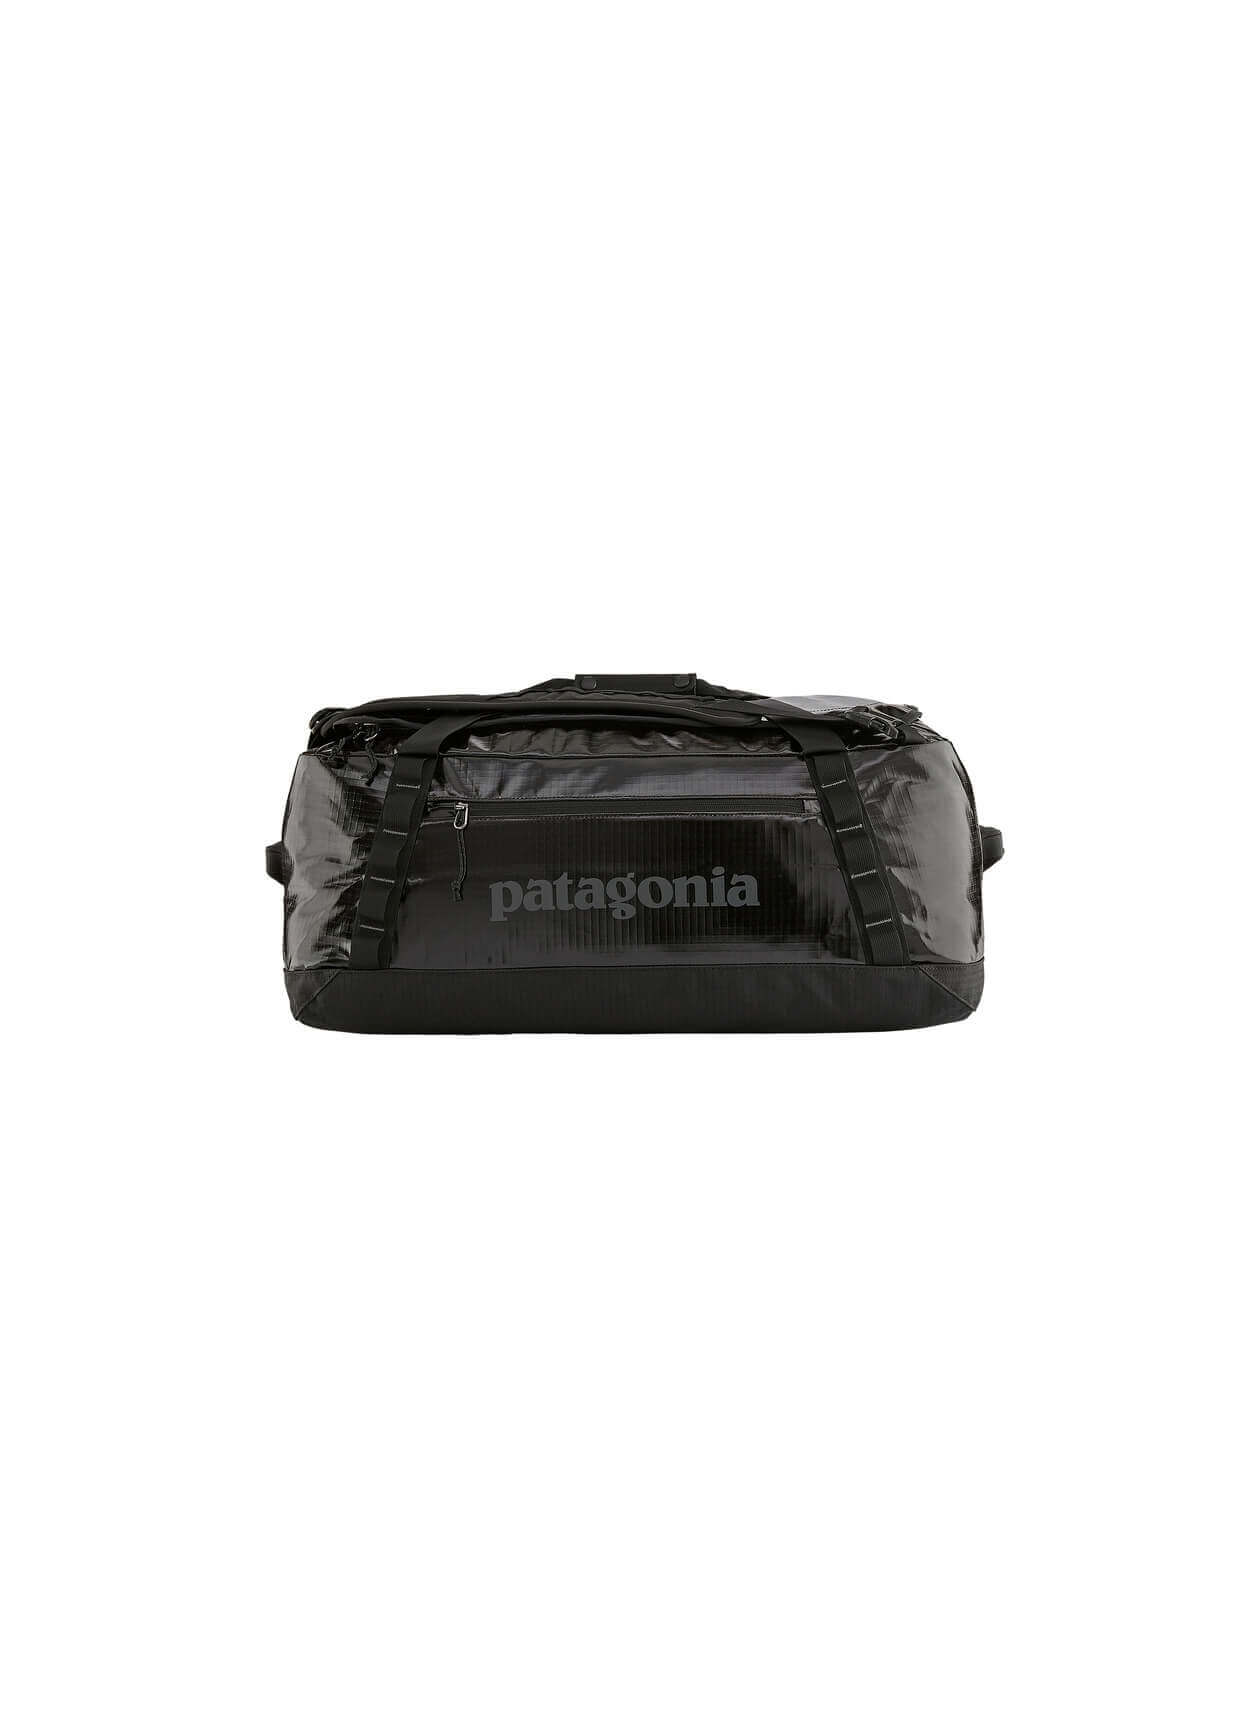 Patagonia 49342 - Black Hole Duffel Bag 55L